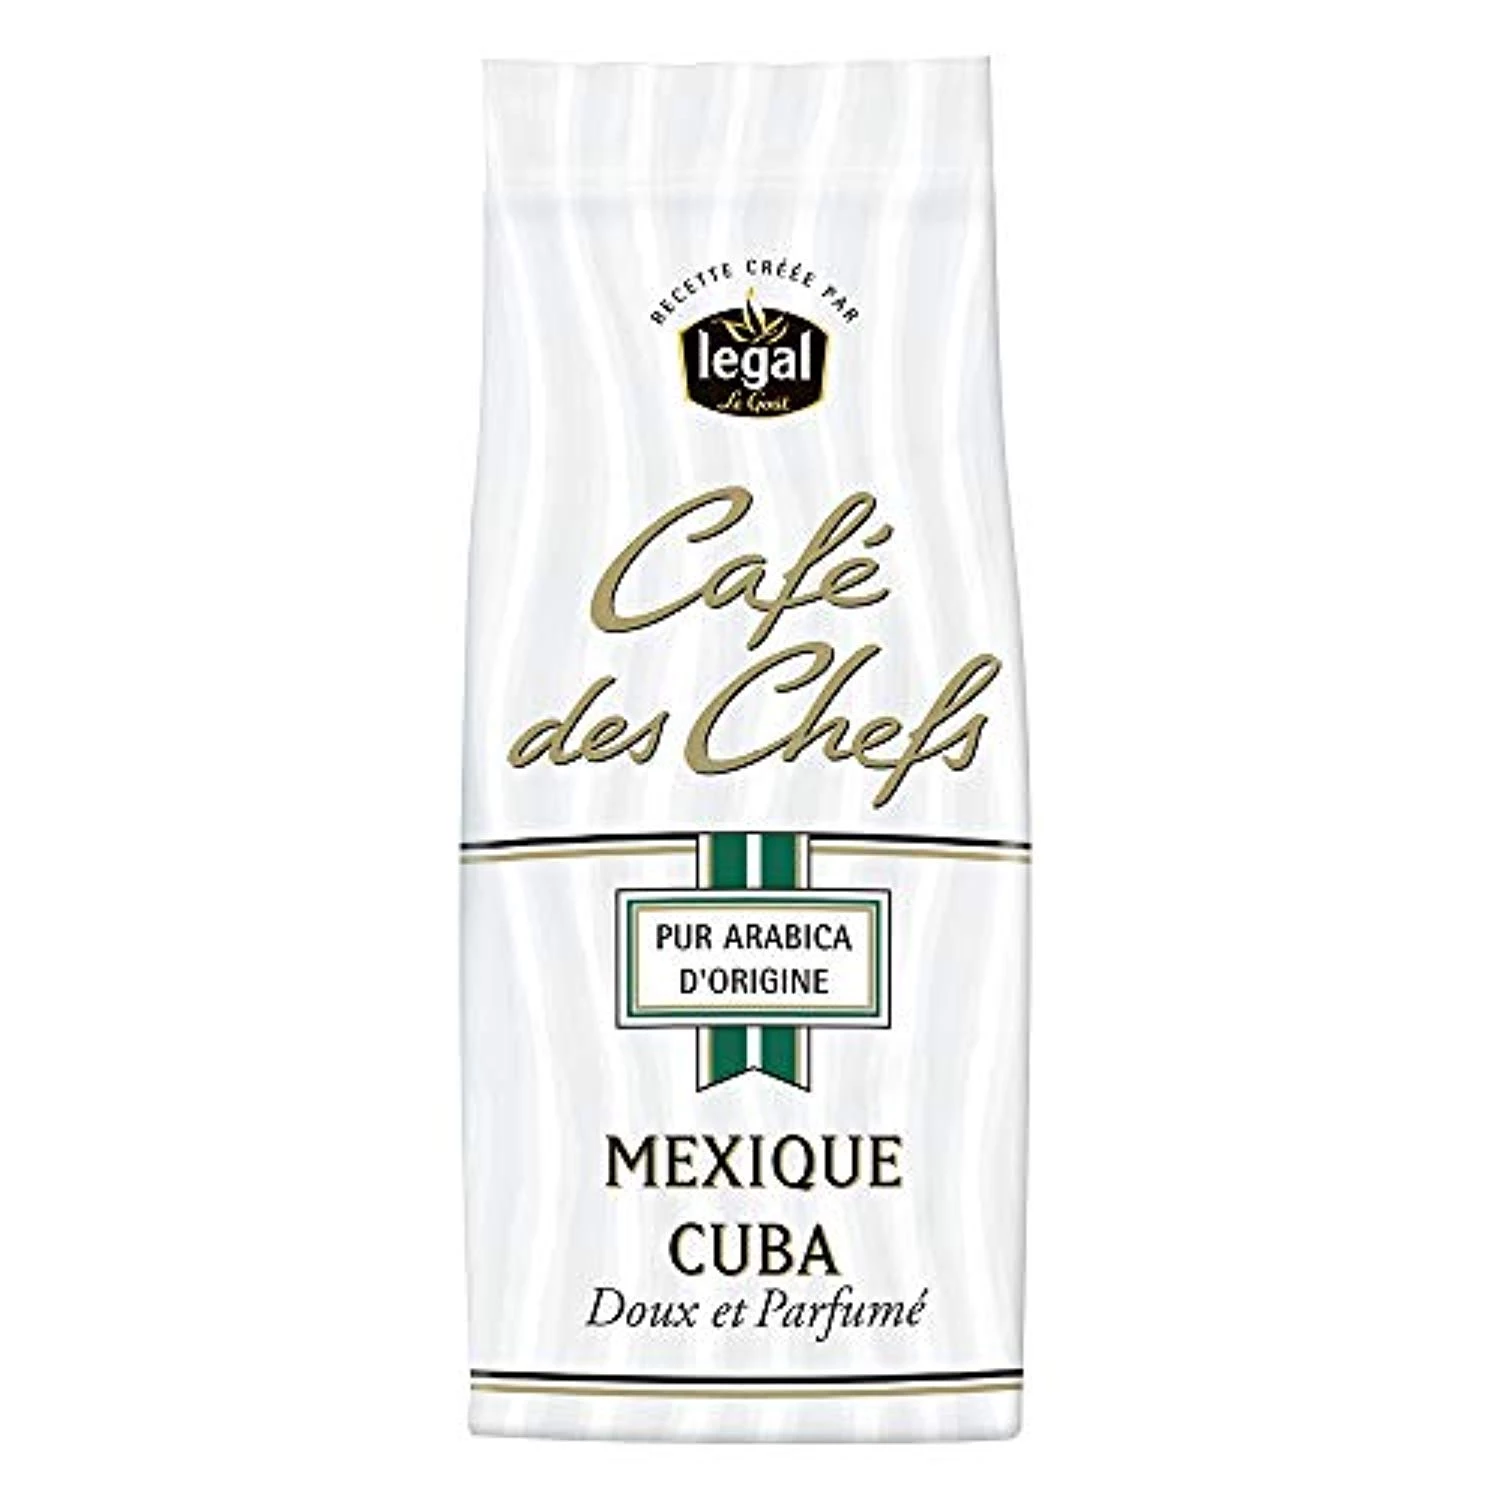 Pure Arabica coffee from Mexico and Cuba; Café des Chefs 250g - LEGAL